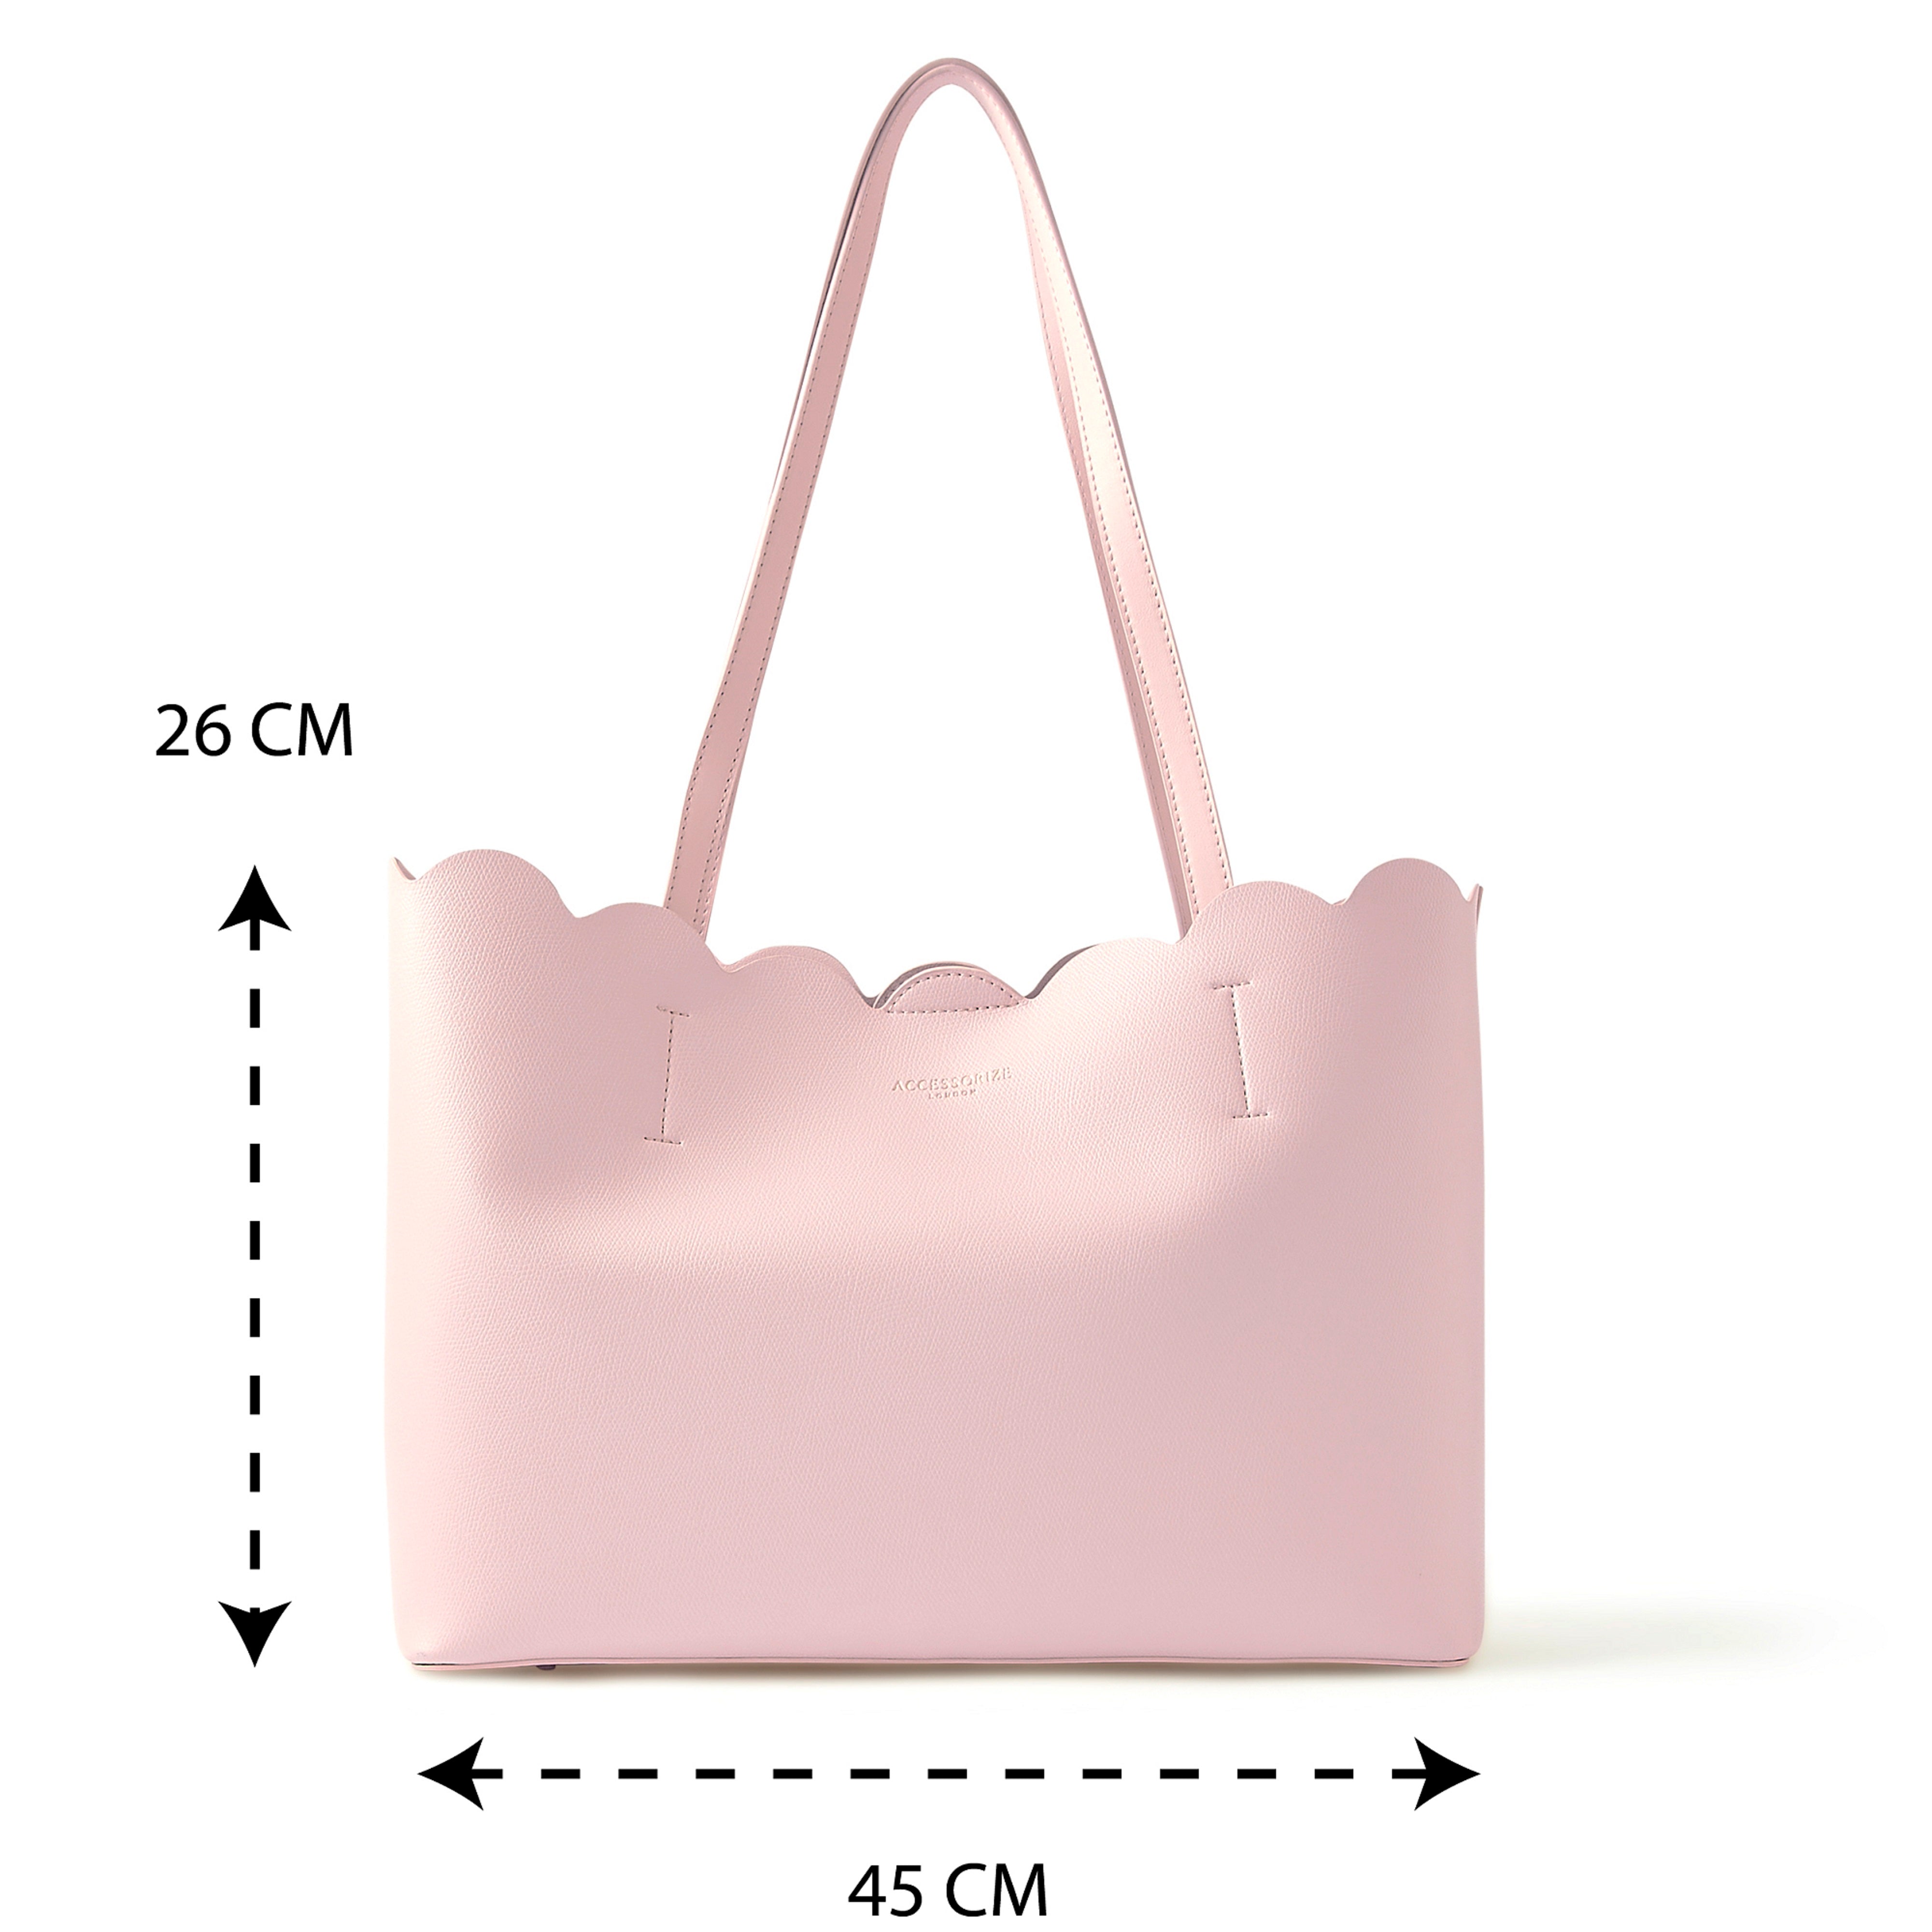 Accessorize London Women's Faux Leather Pink Leo Scallop Tote bag